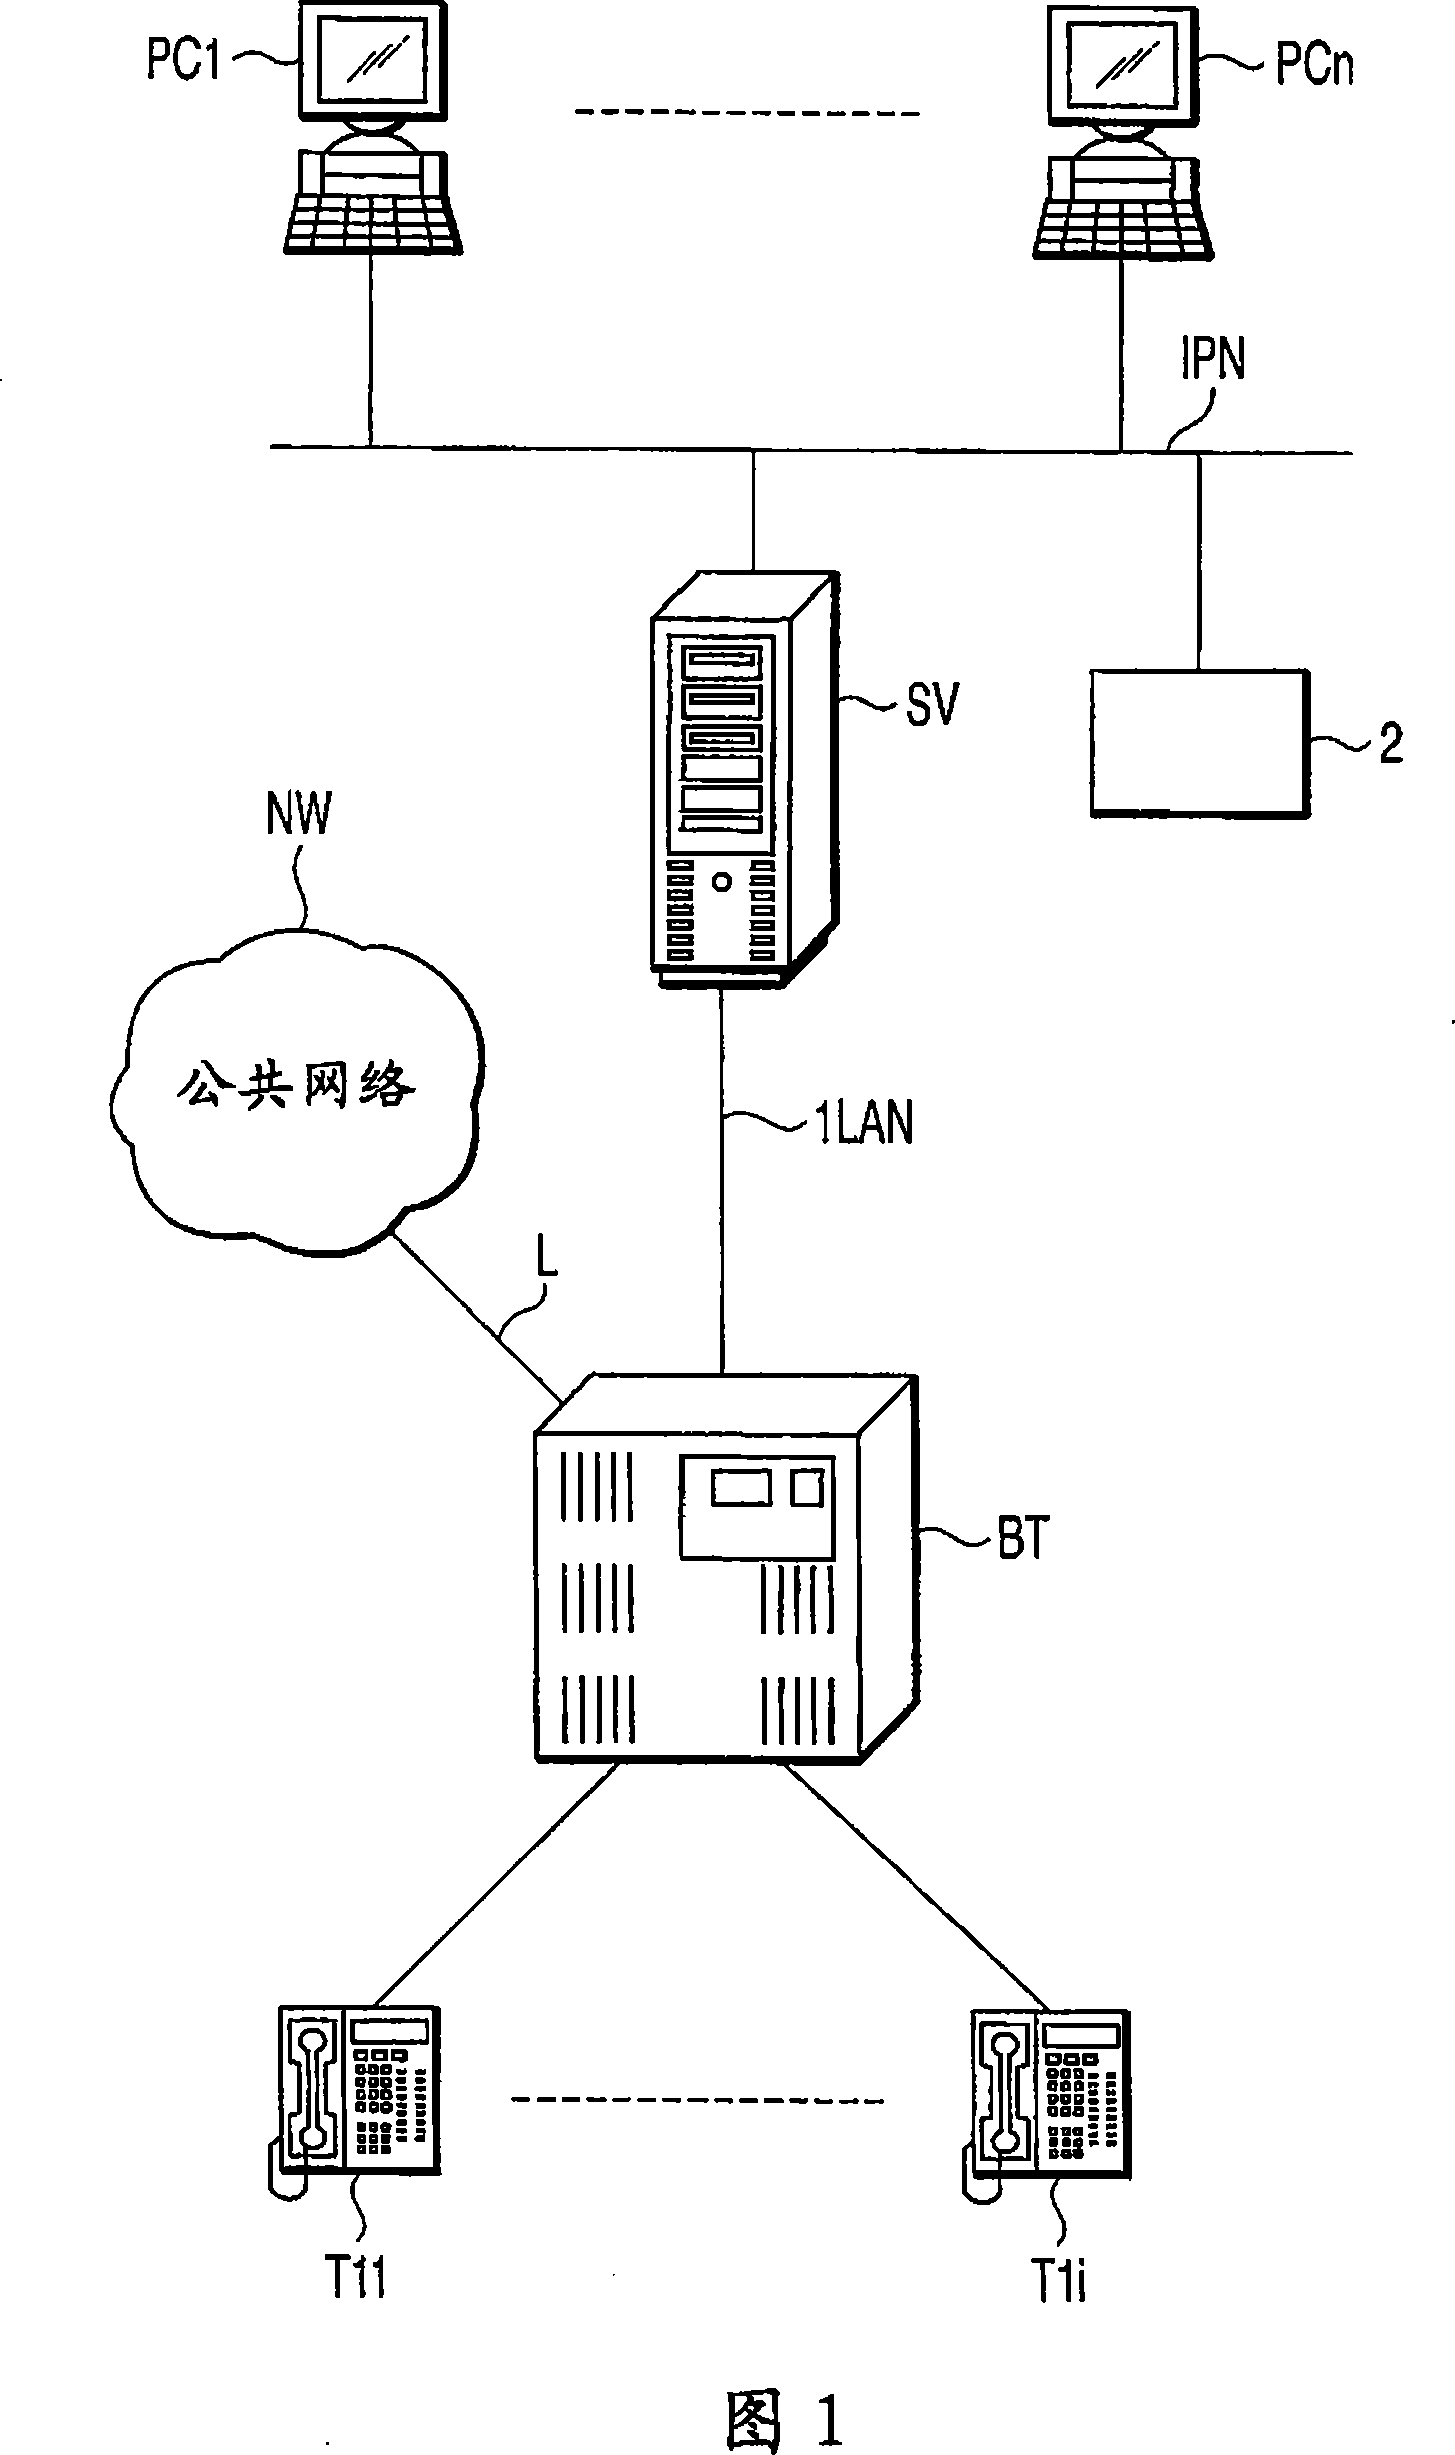 Server apparatus